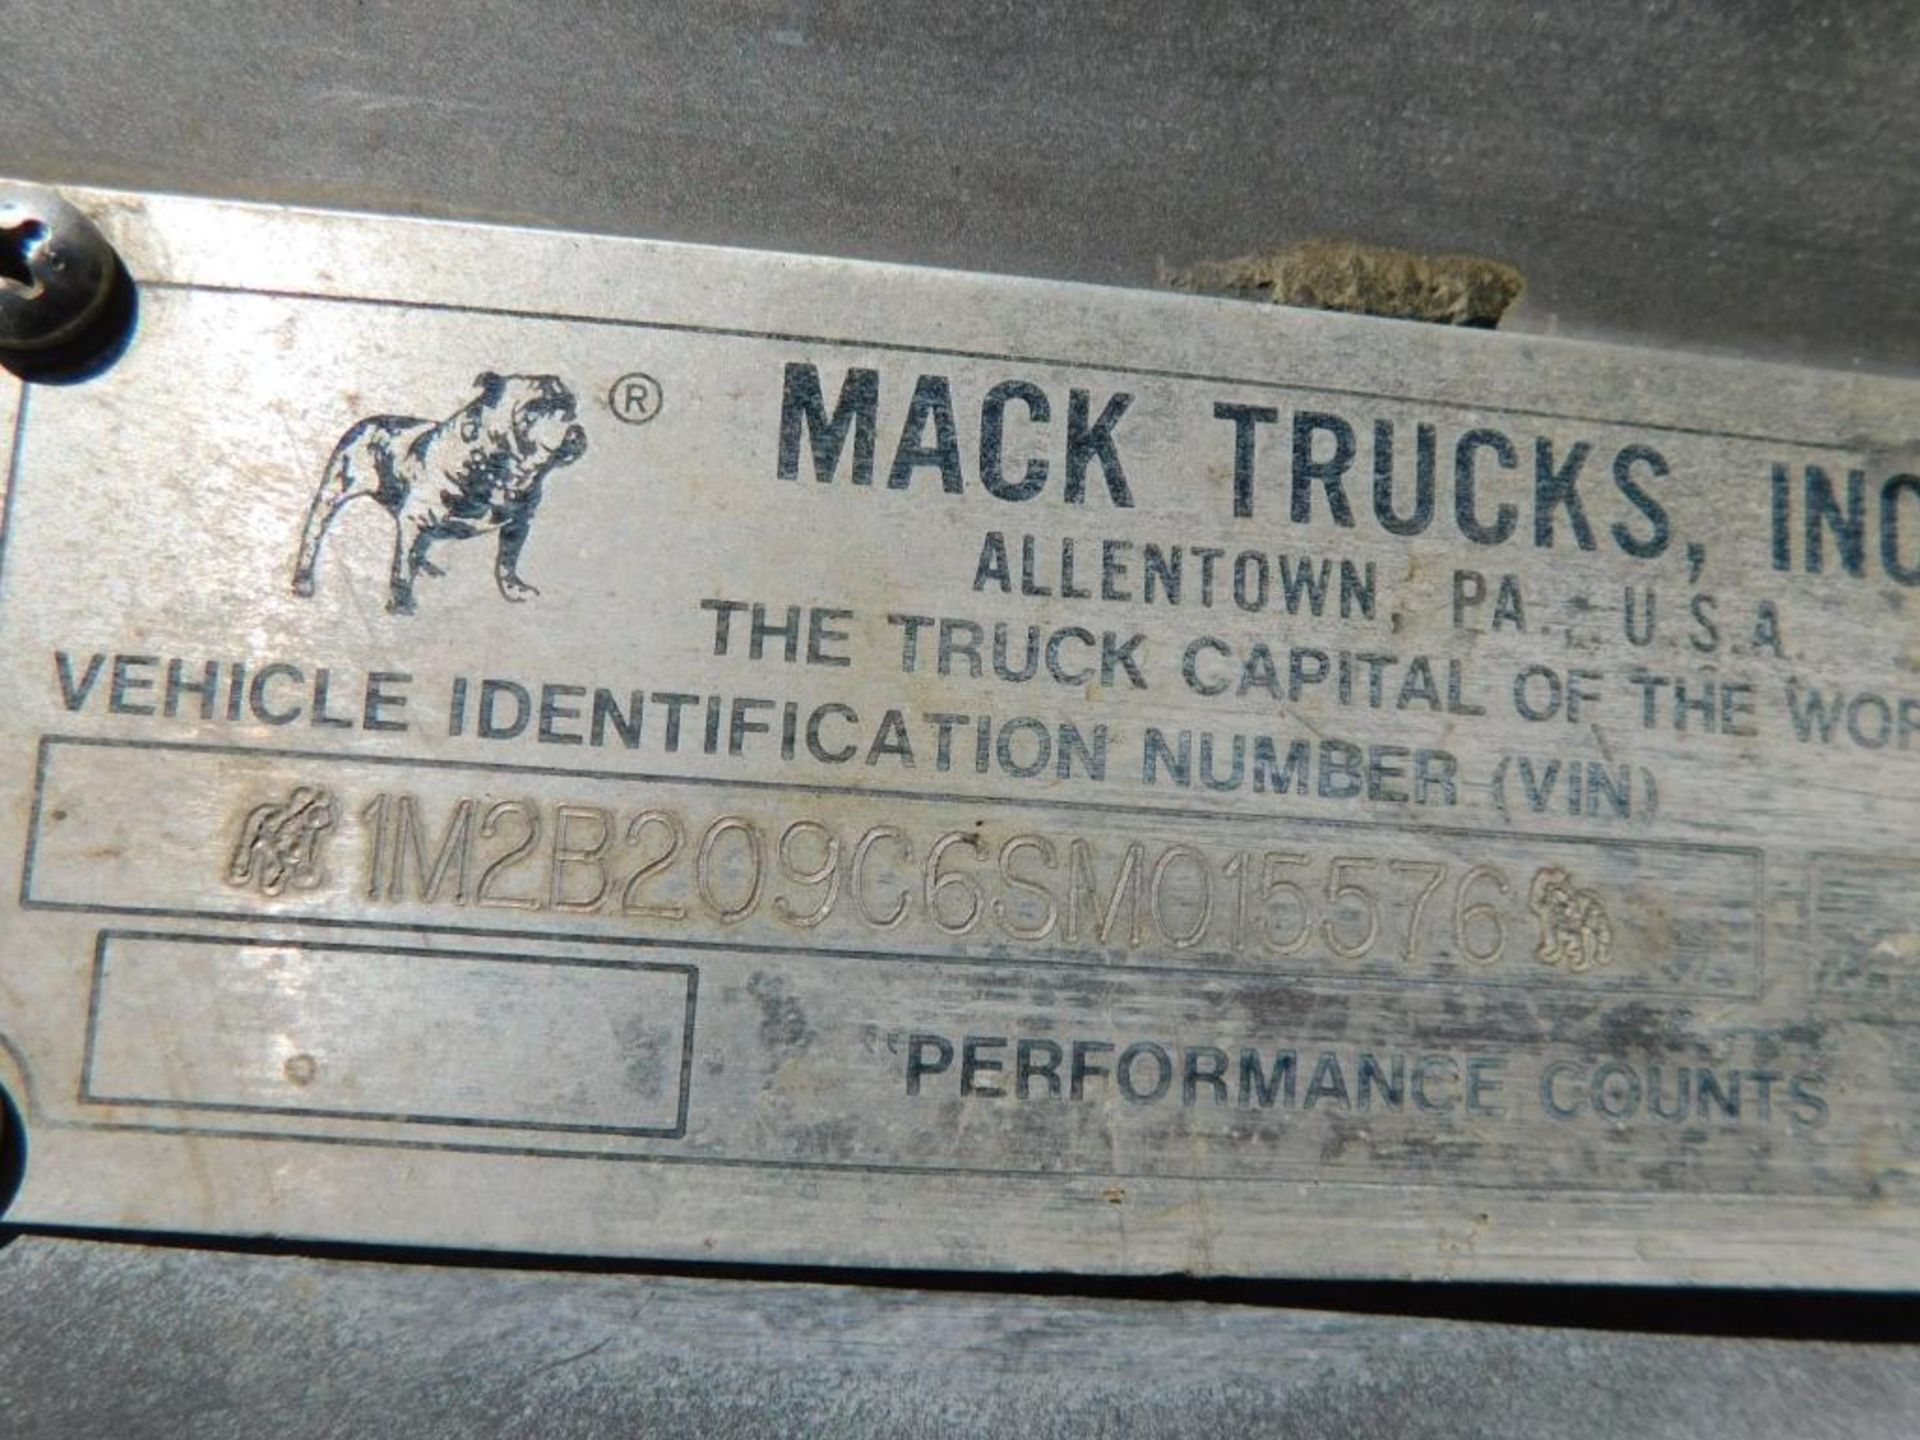 1995 Mack T. A. Roll Off Truck Model DM690S, VIN 1M2B209C65M015576, 1995 Galbreath 60,000 Lb. - Image 30 of 30